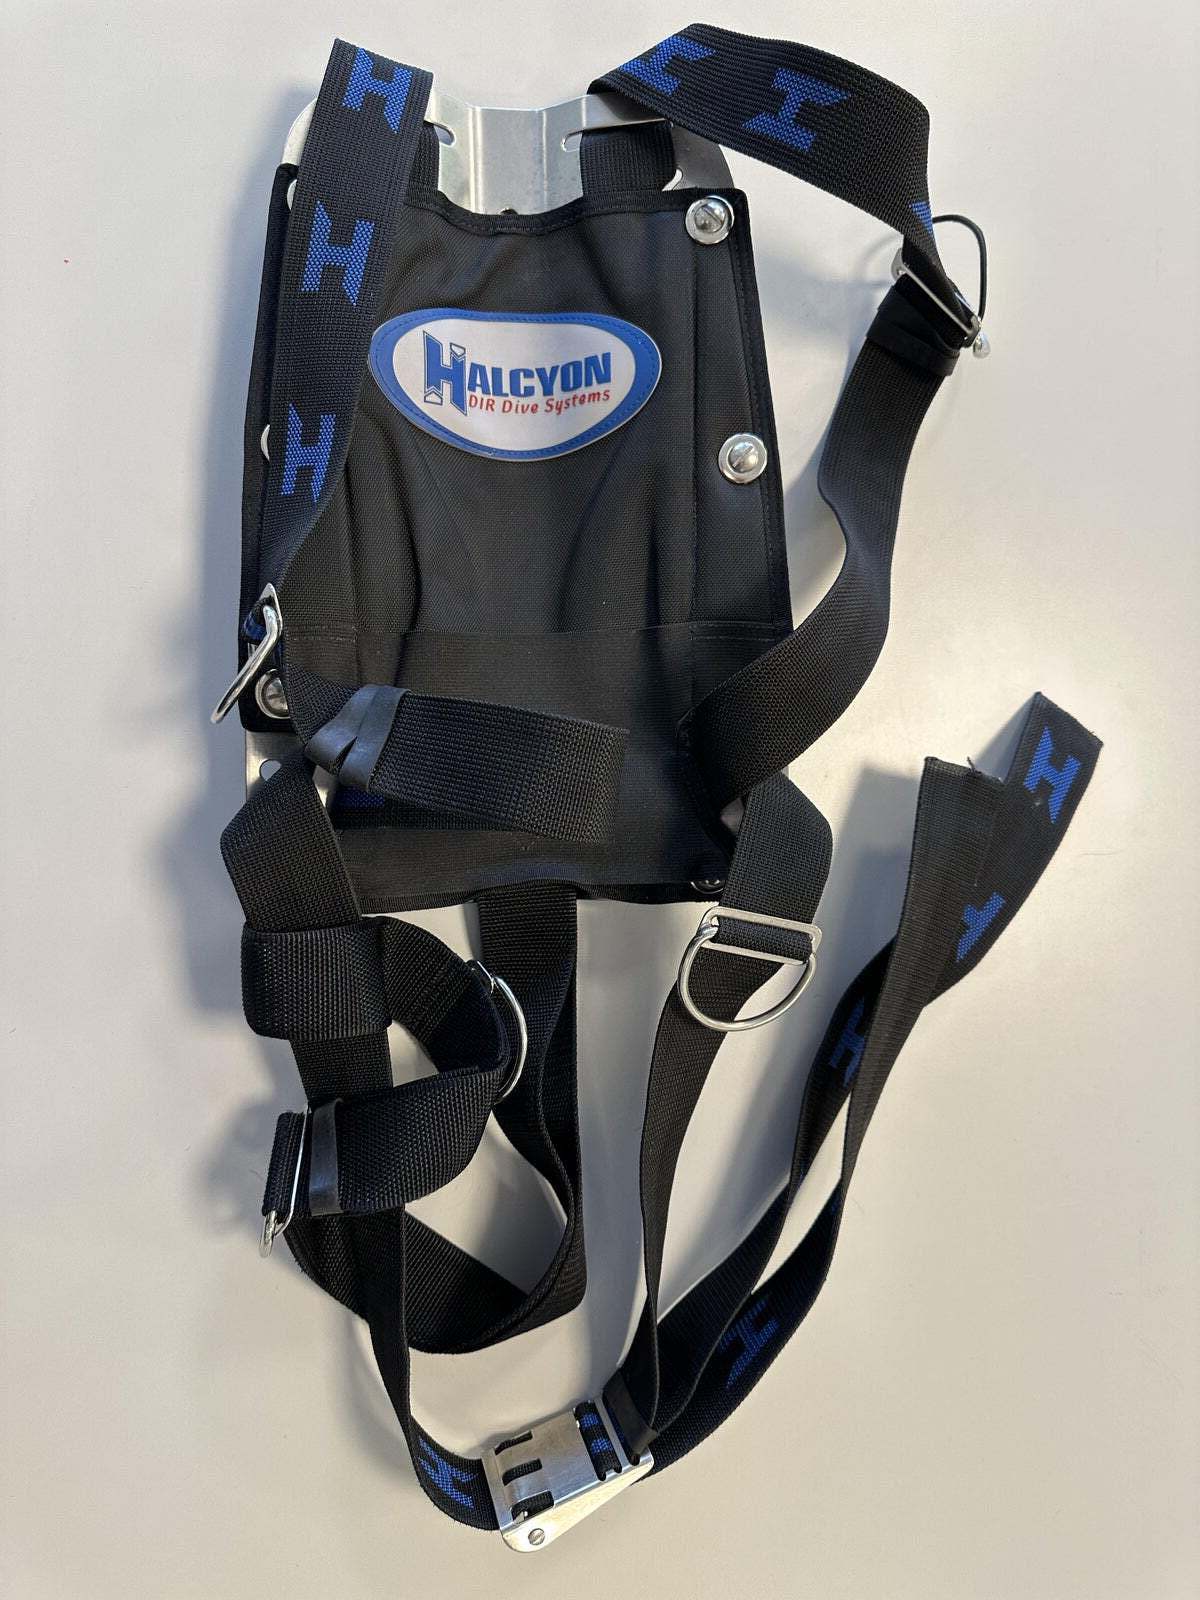 Halcyon Bagplade med One-piece harness og MC Storage lomme